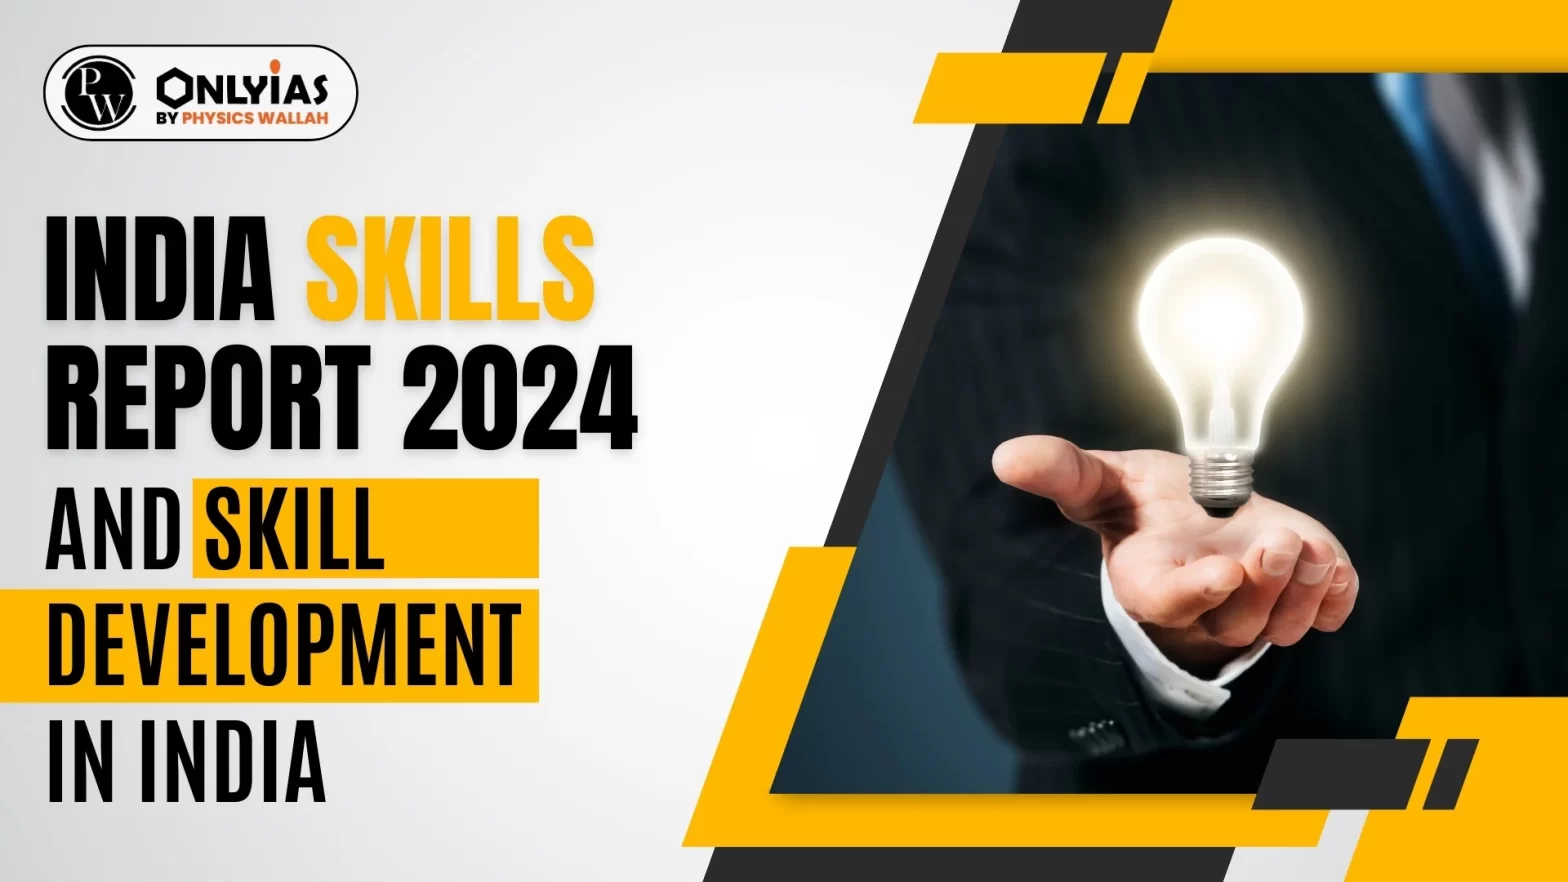 India Skills Report 2024 and Skill Development in India